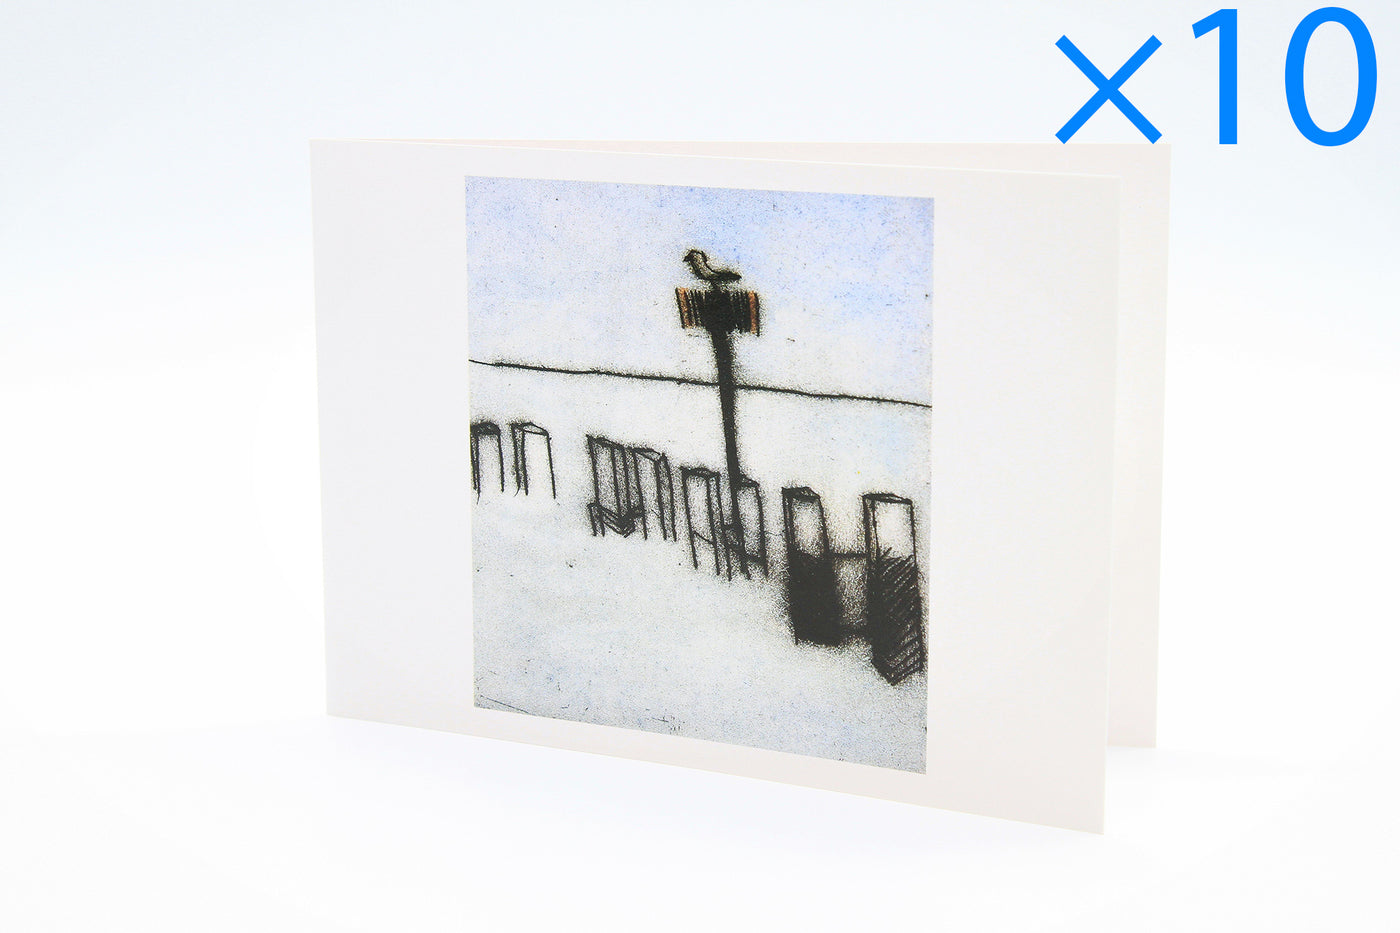 Set of 10: Richard Spare - 'Lone Gull' - Art Greetings Card (10.5 x 15 cm - Single Design)